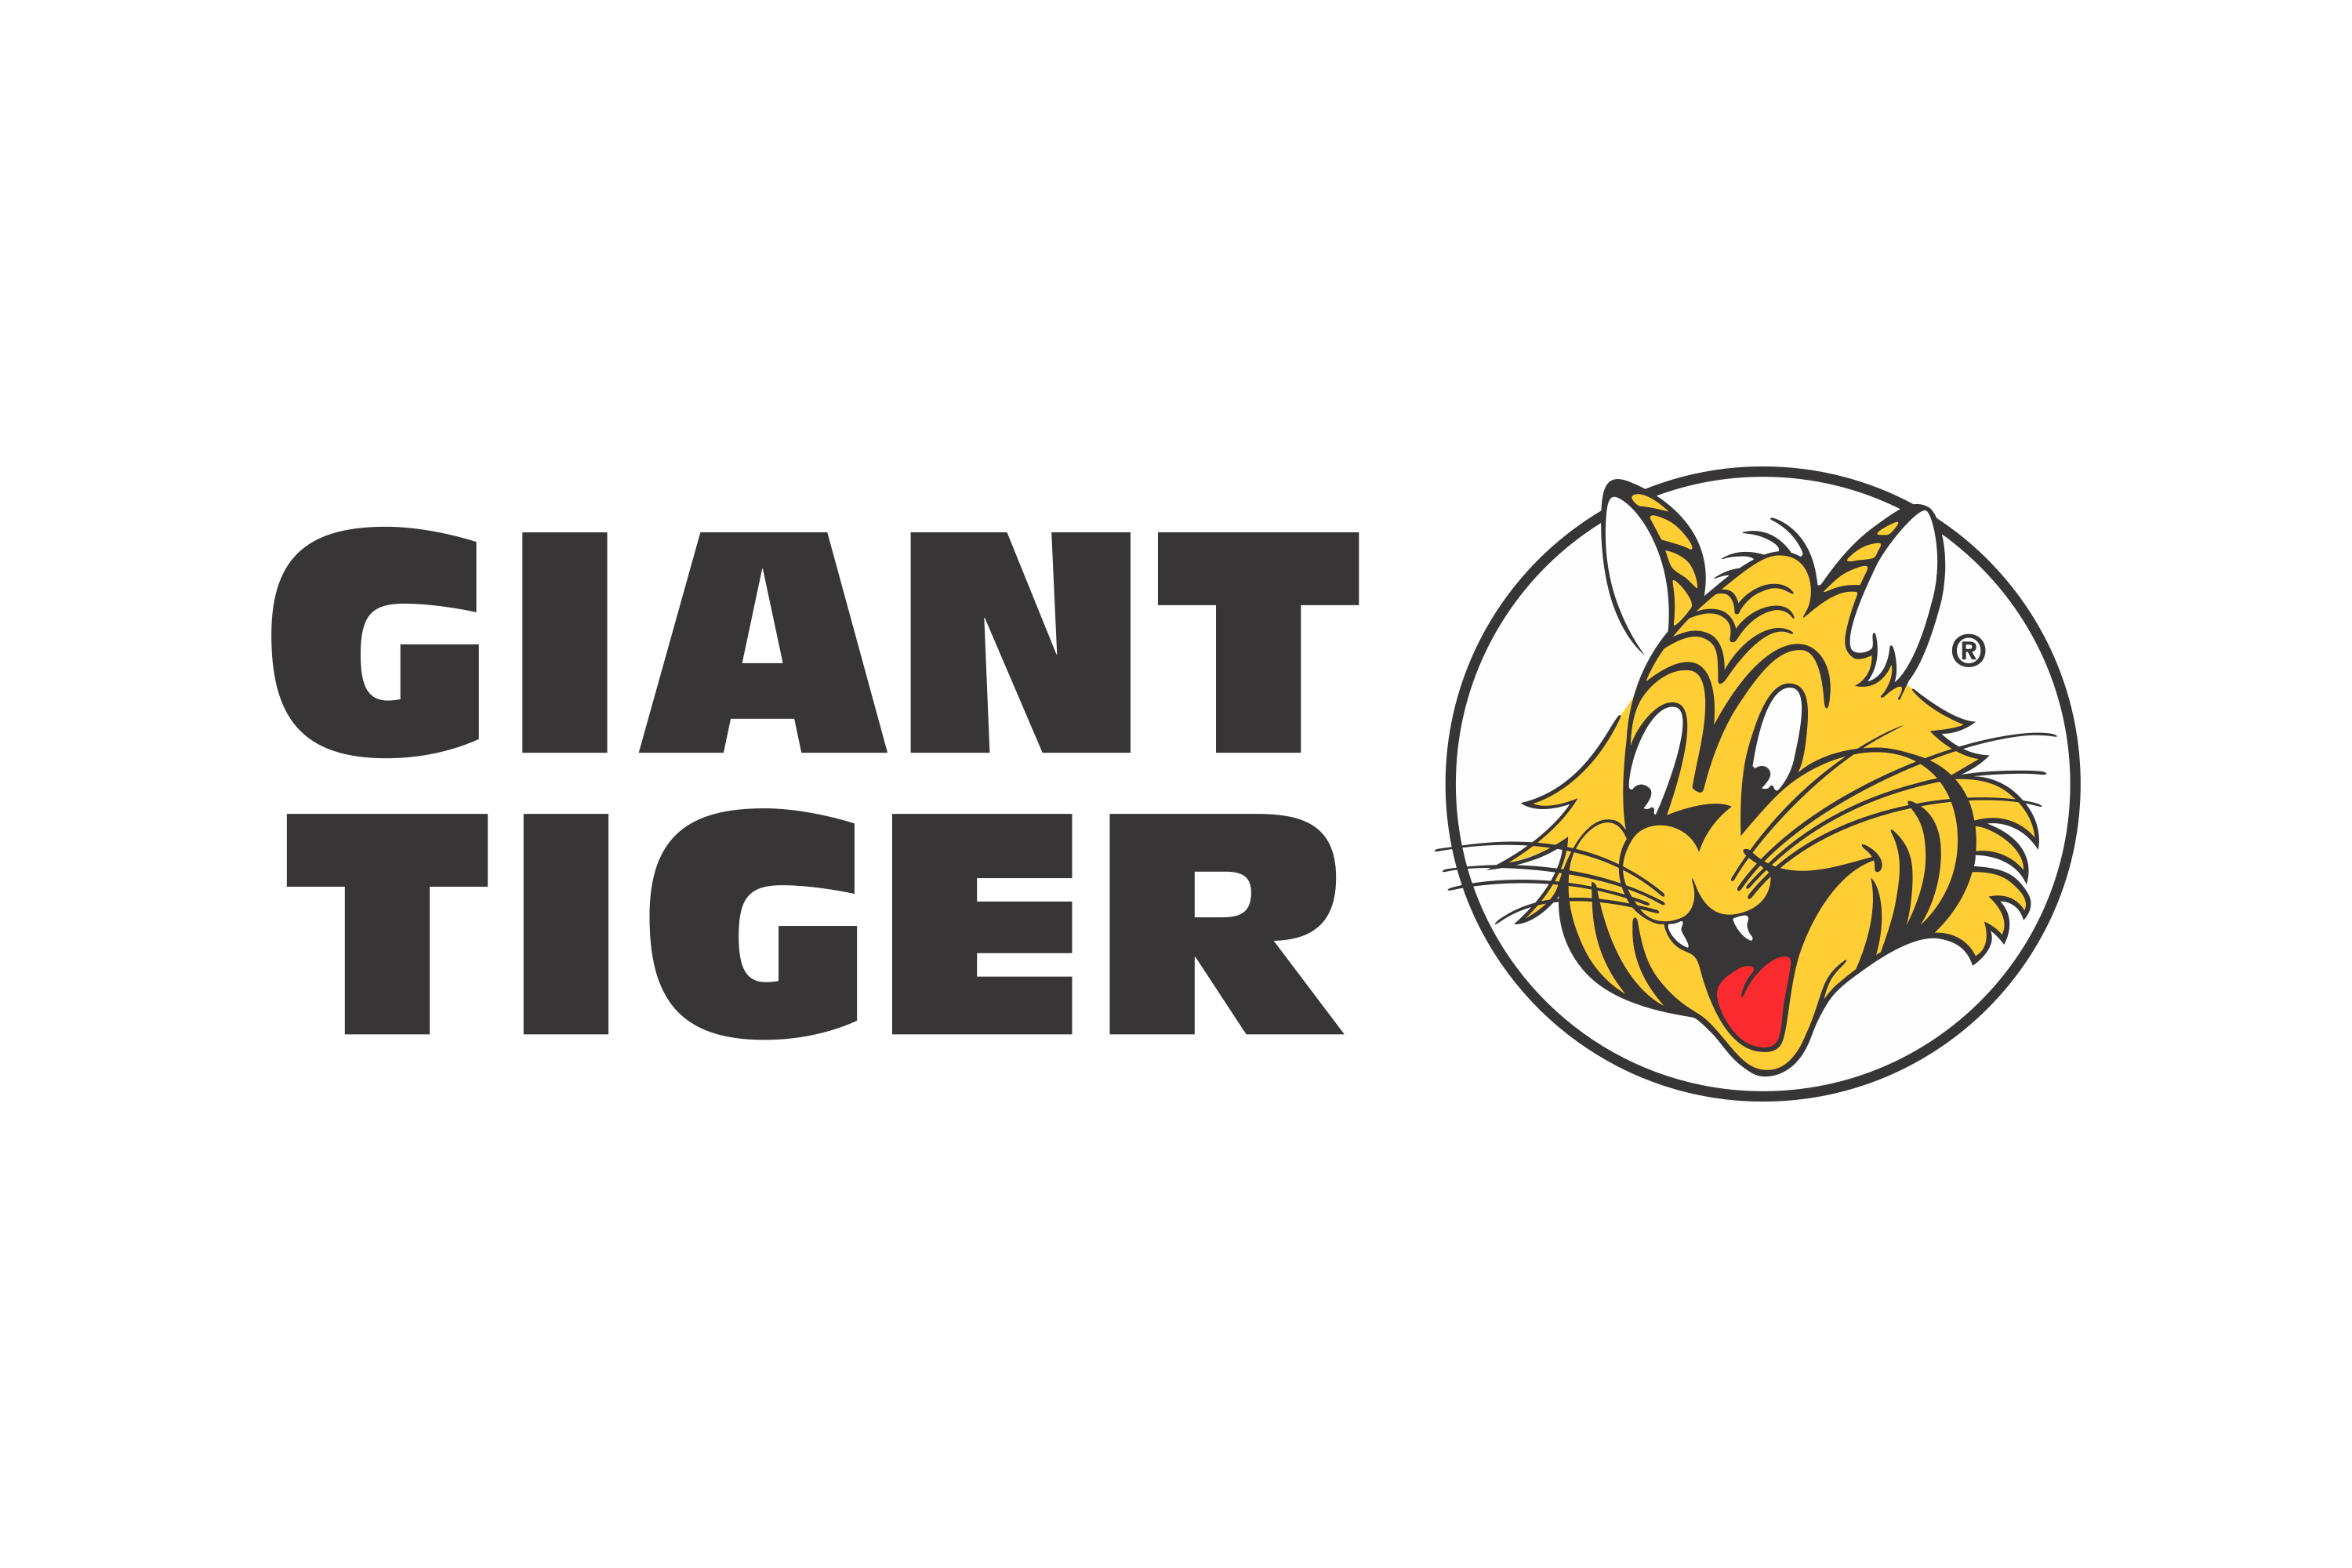 https://download.logo.wine/logo/Giant_Tiger/Giant_Tiger-Logo.wine.png